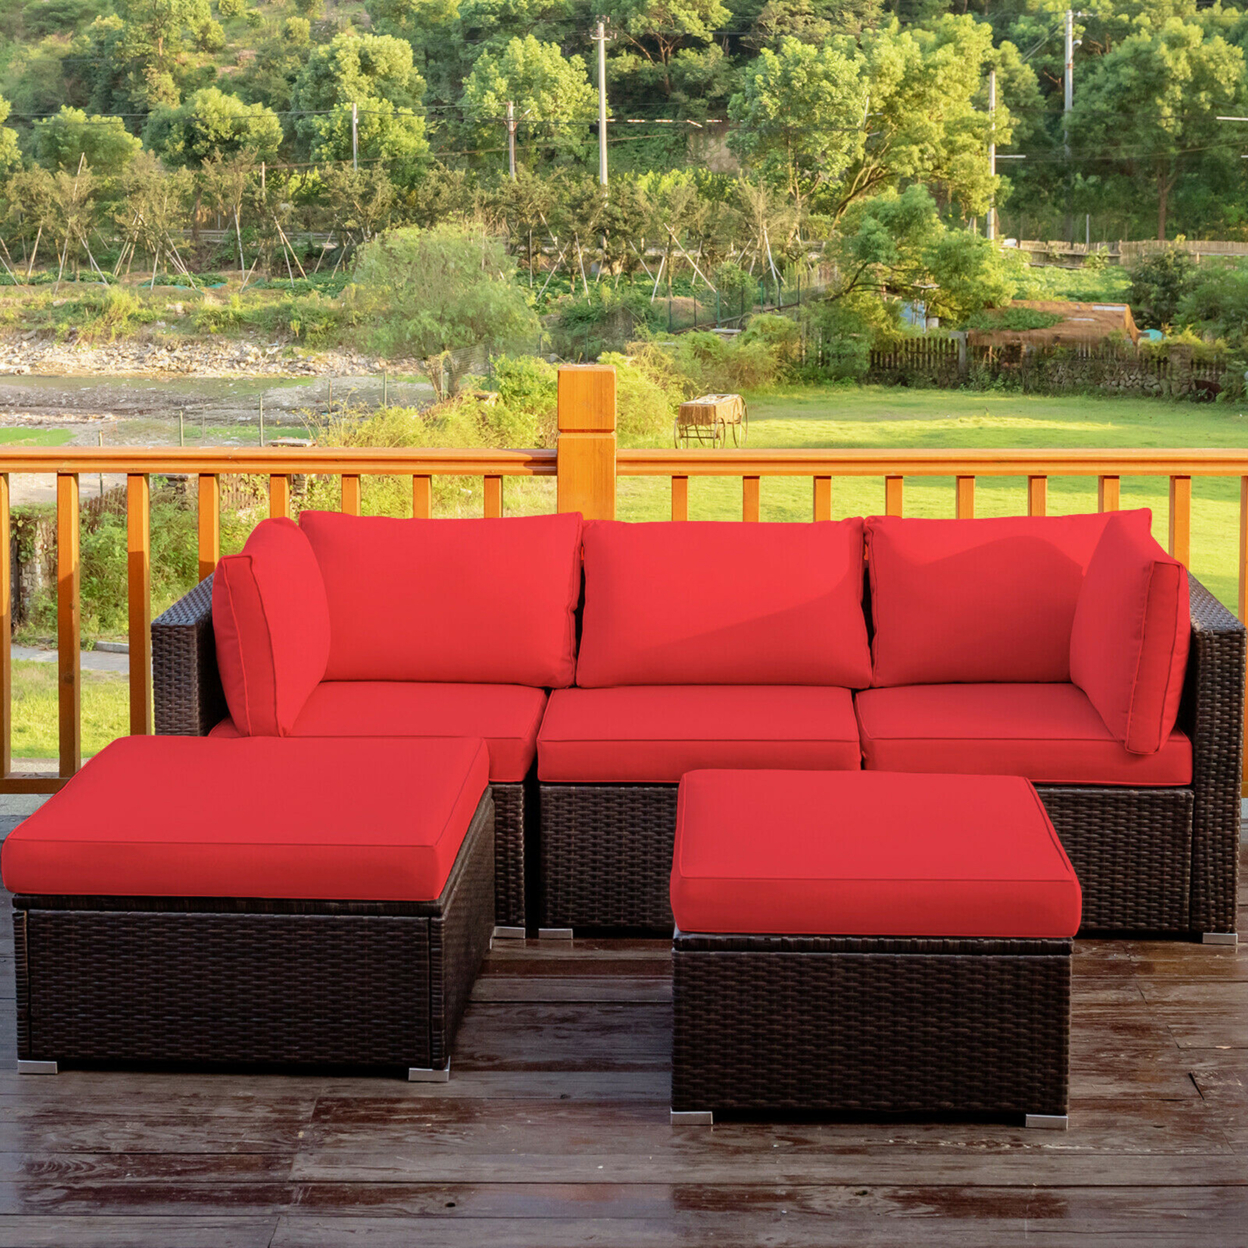 5PCS Rattan Patio Conversation Set Outdoor Furniture Set W/ Ottoman Red Cushion